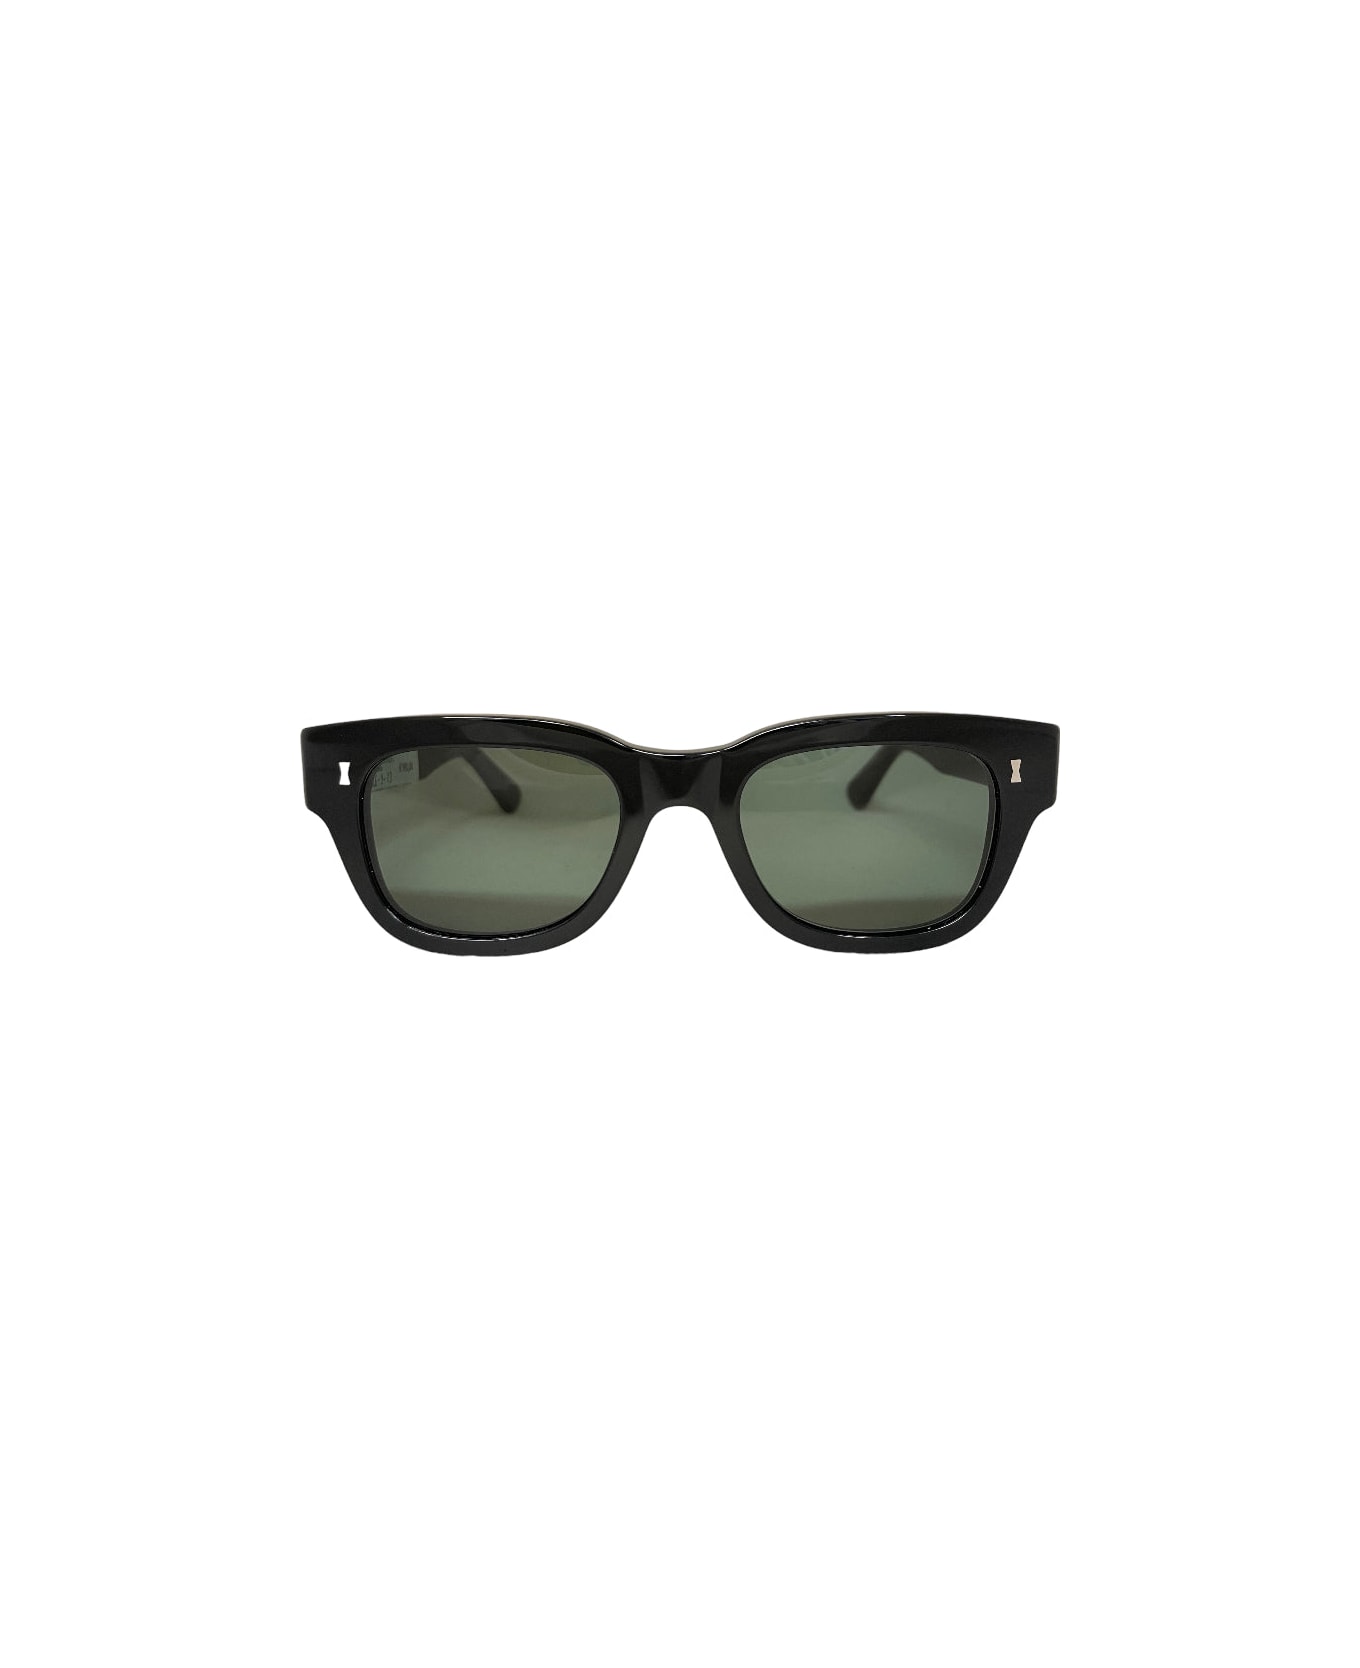 Cubitts Frederick - Black Sunglasses サングラス